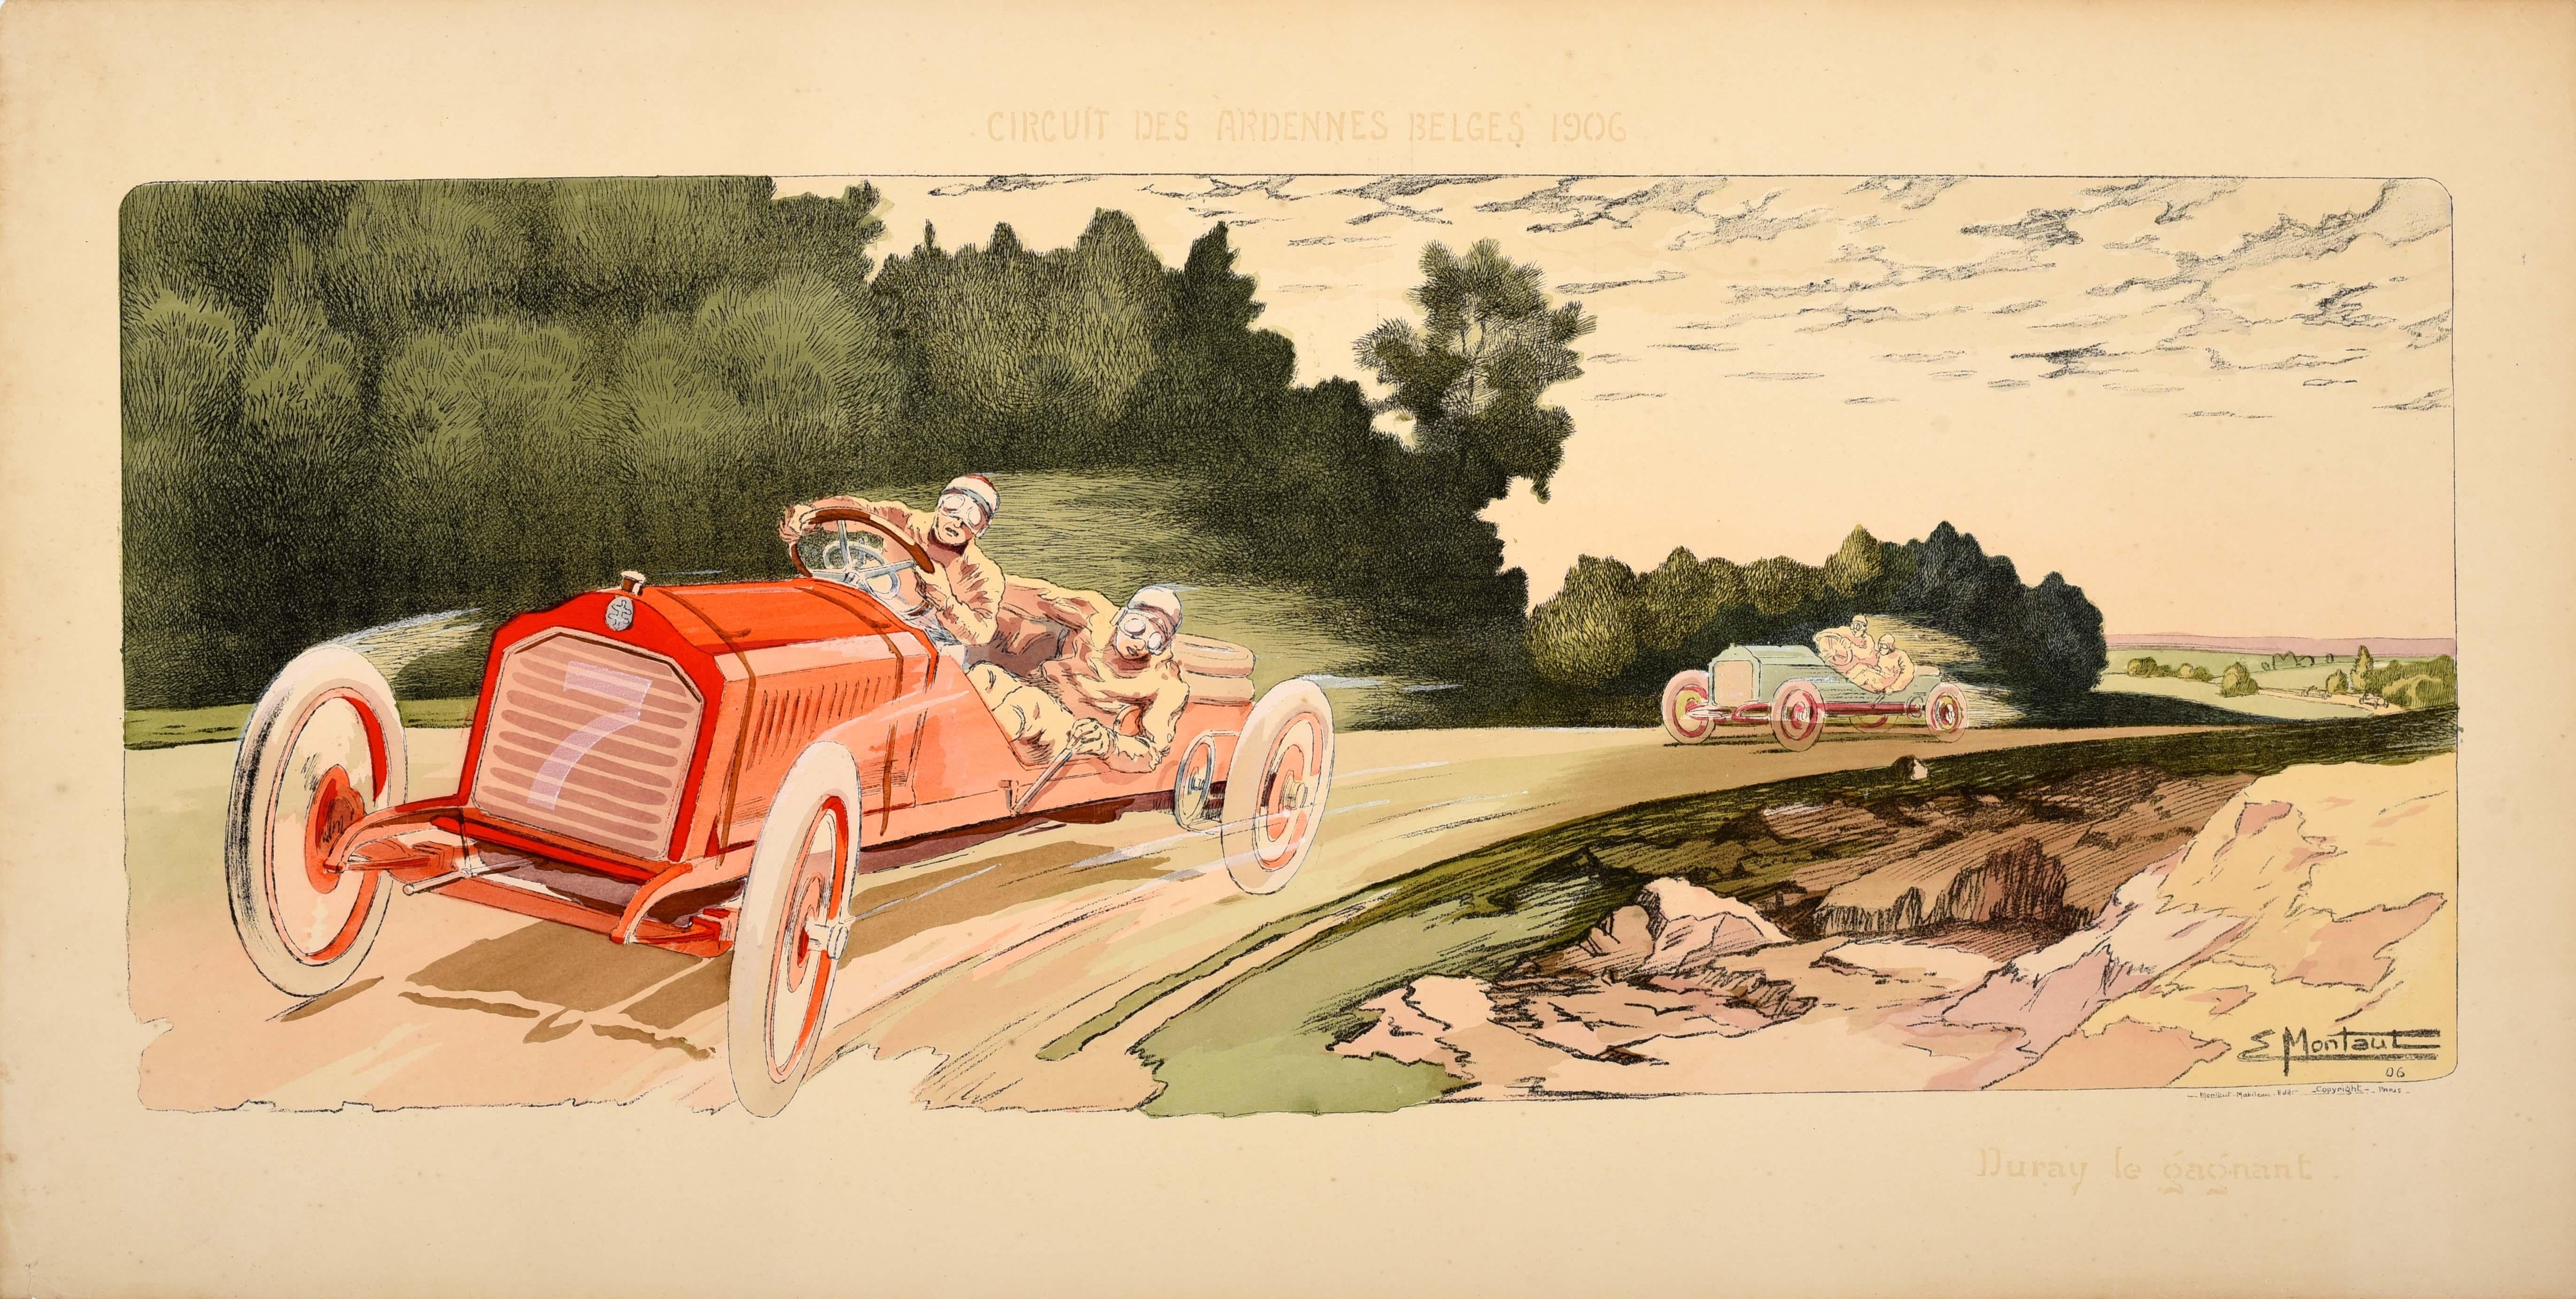 Ernest Montaut Print – Original-Vintage- Motorsport-Poster, Circuit Des Ardennes Belge 1906, Arthur Duray